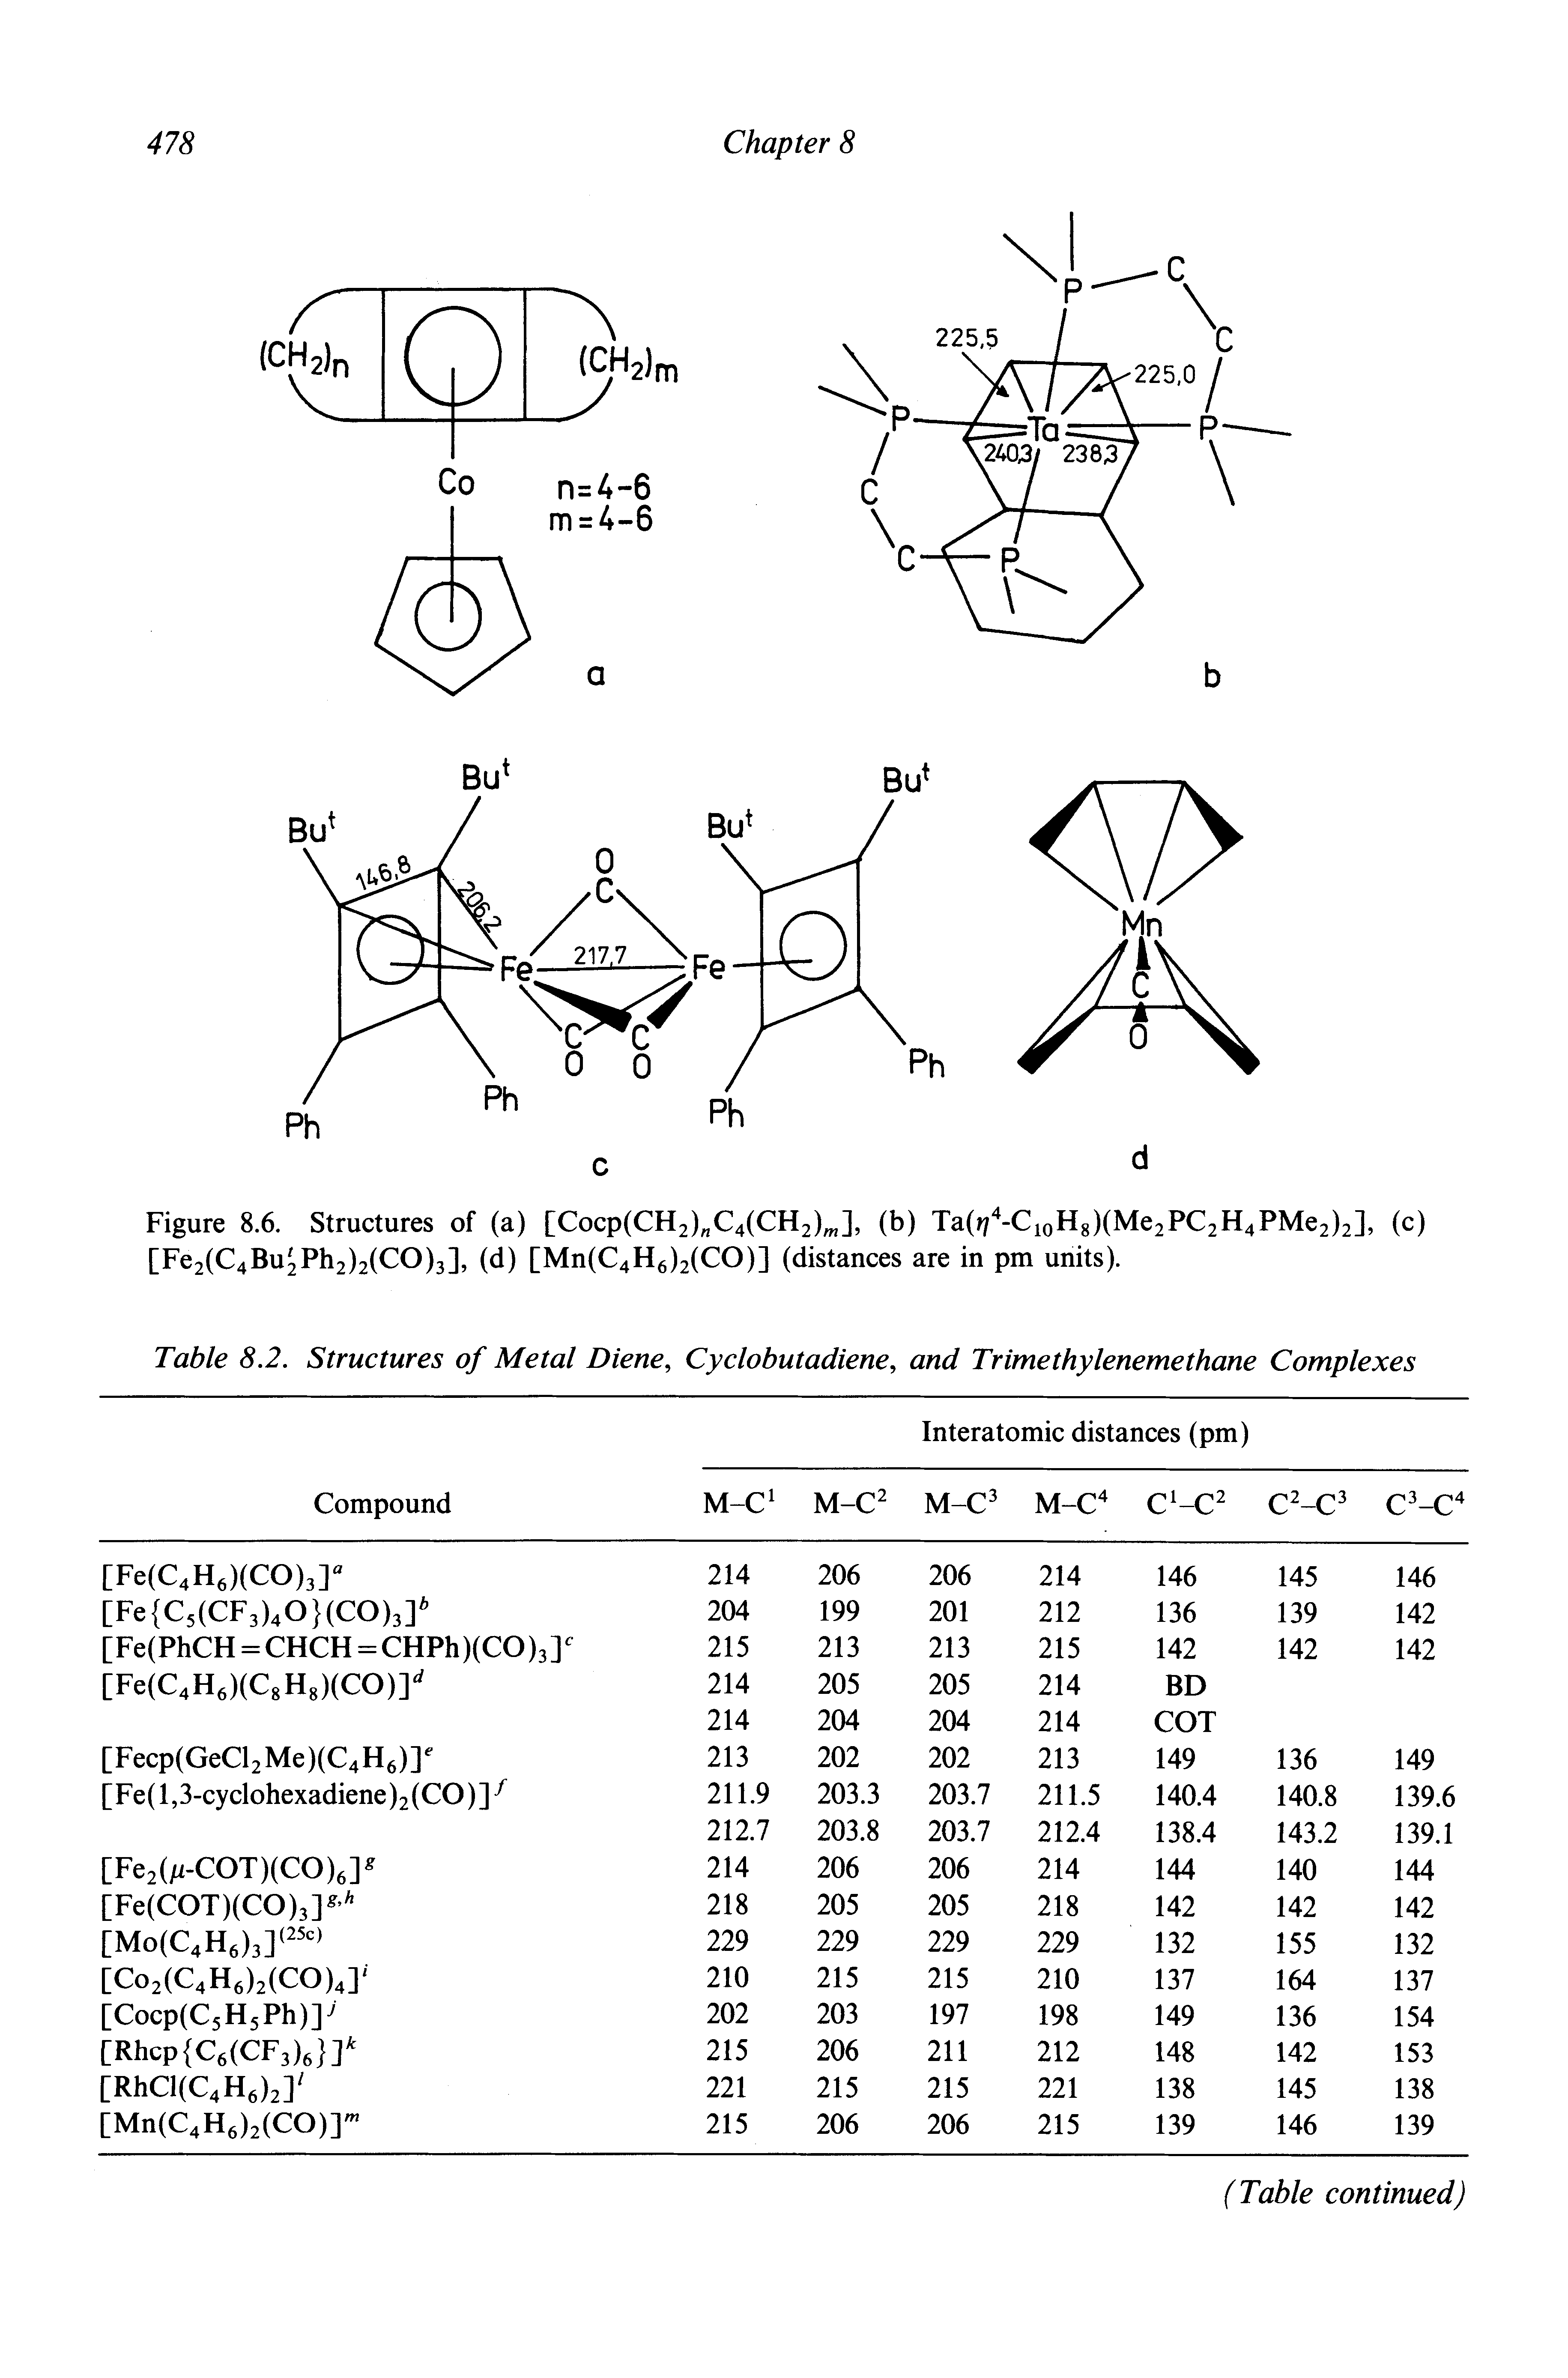 Table 8.2. Structures of Metal Diene, Cyclobutadiene, and Trimethylenemethane Complexes...